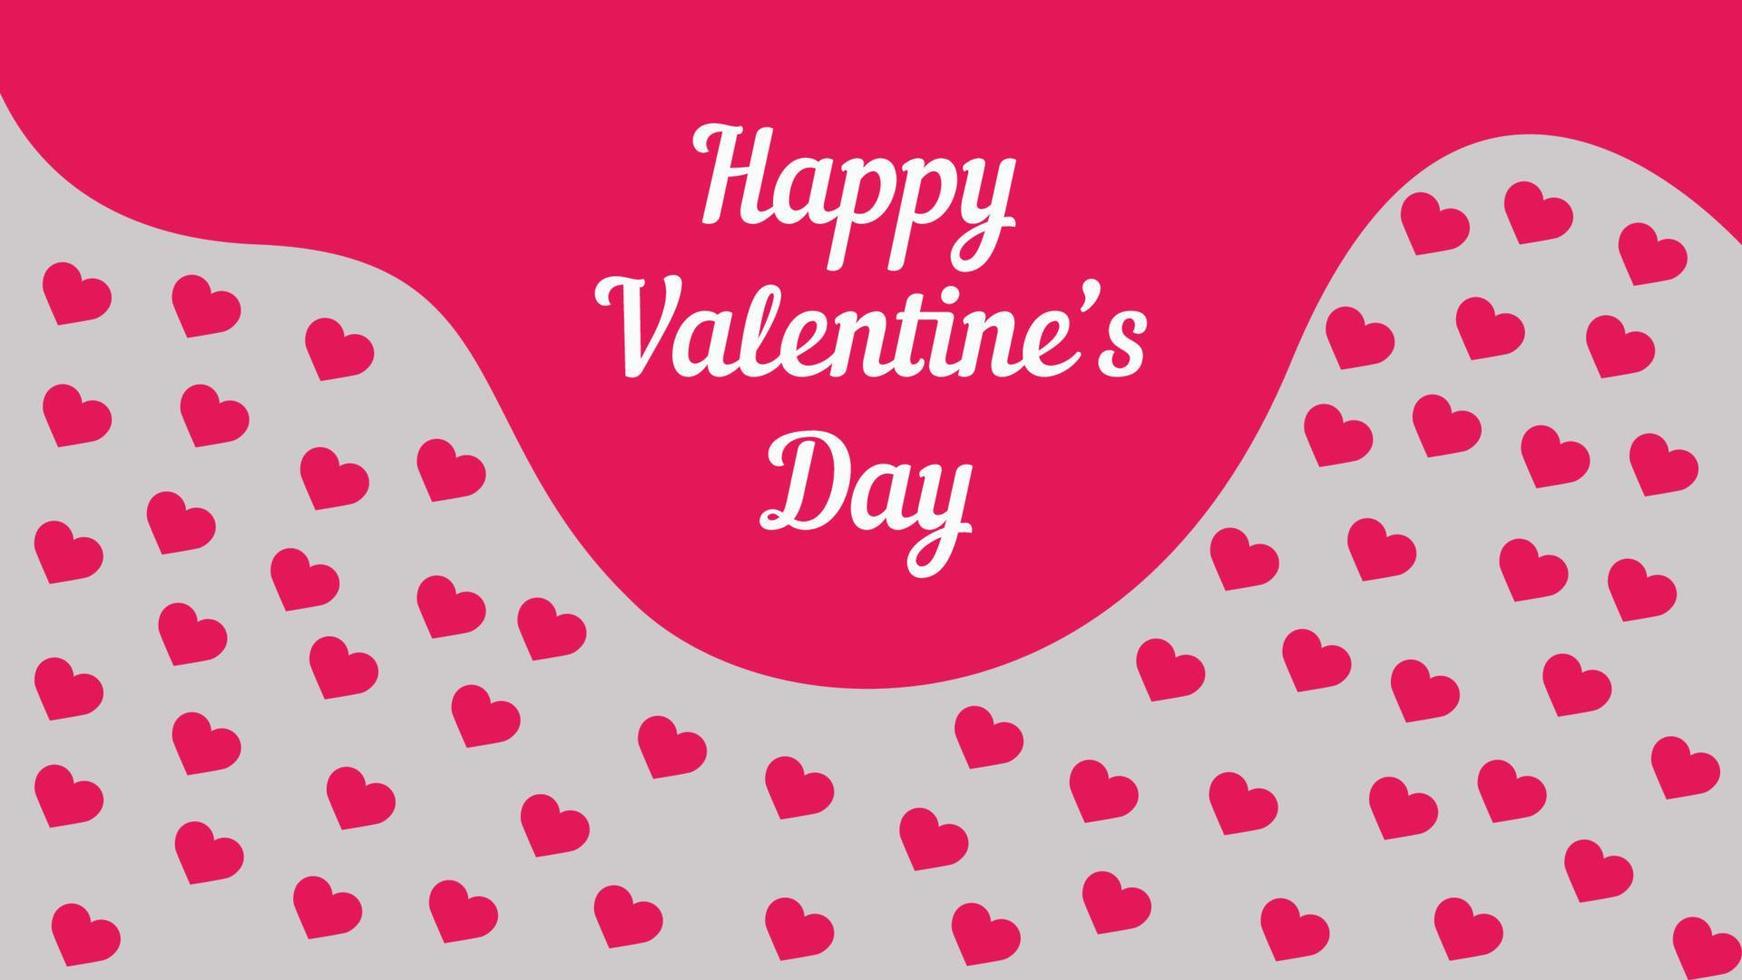 gelukkig Valentijnsdag dag wensen achtergrond met hart vorm patroon vector